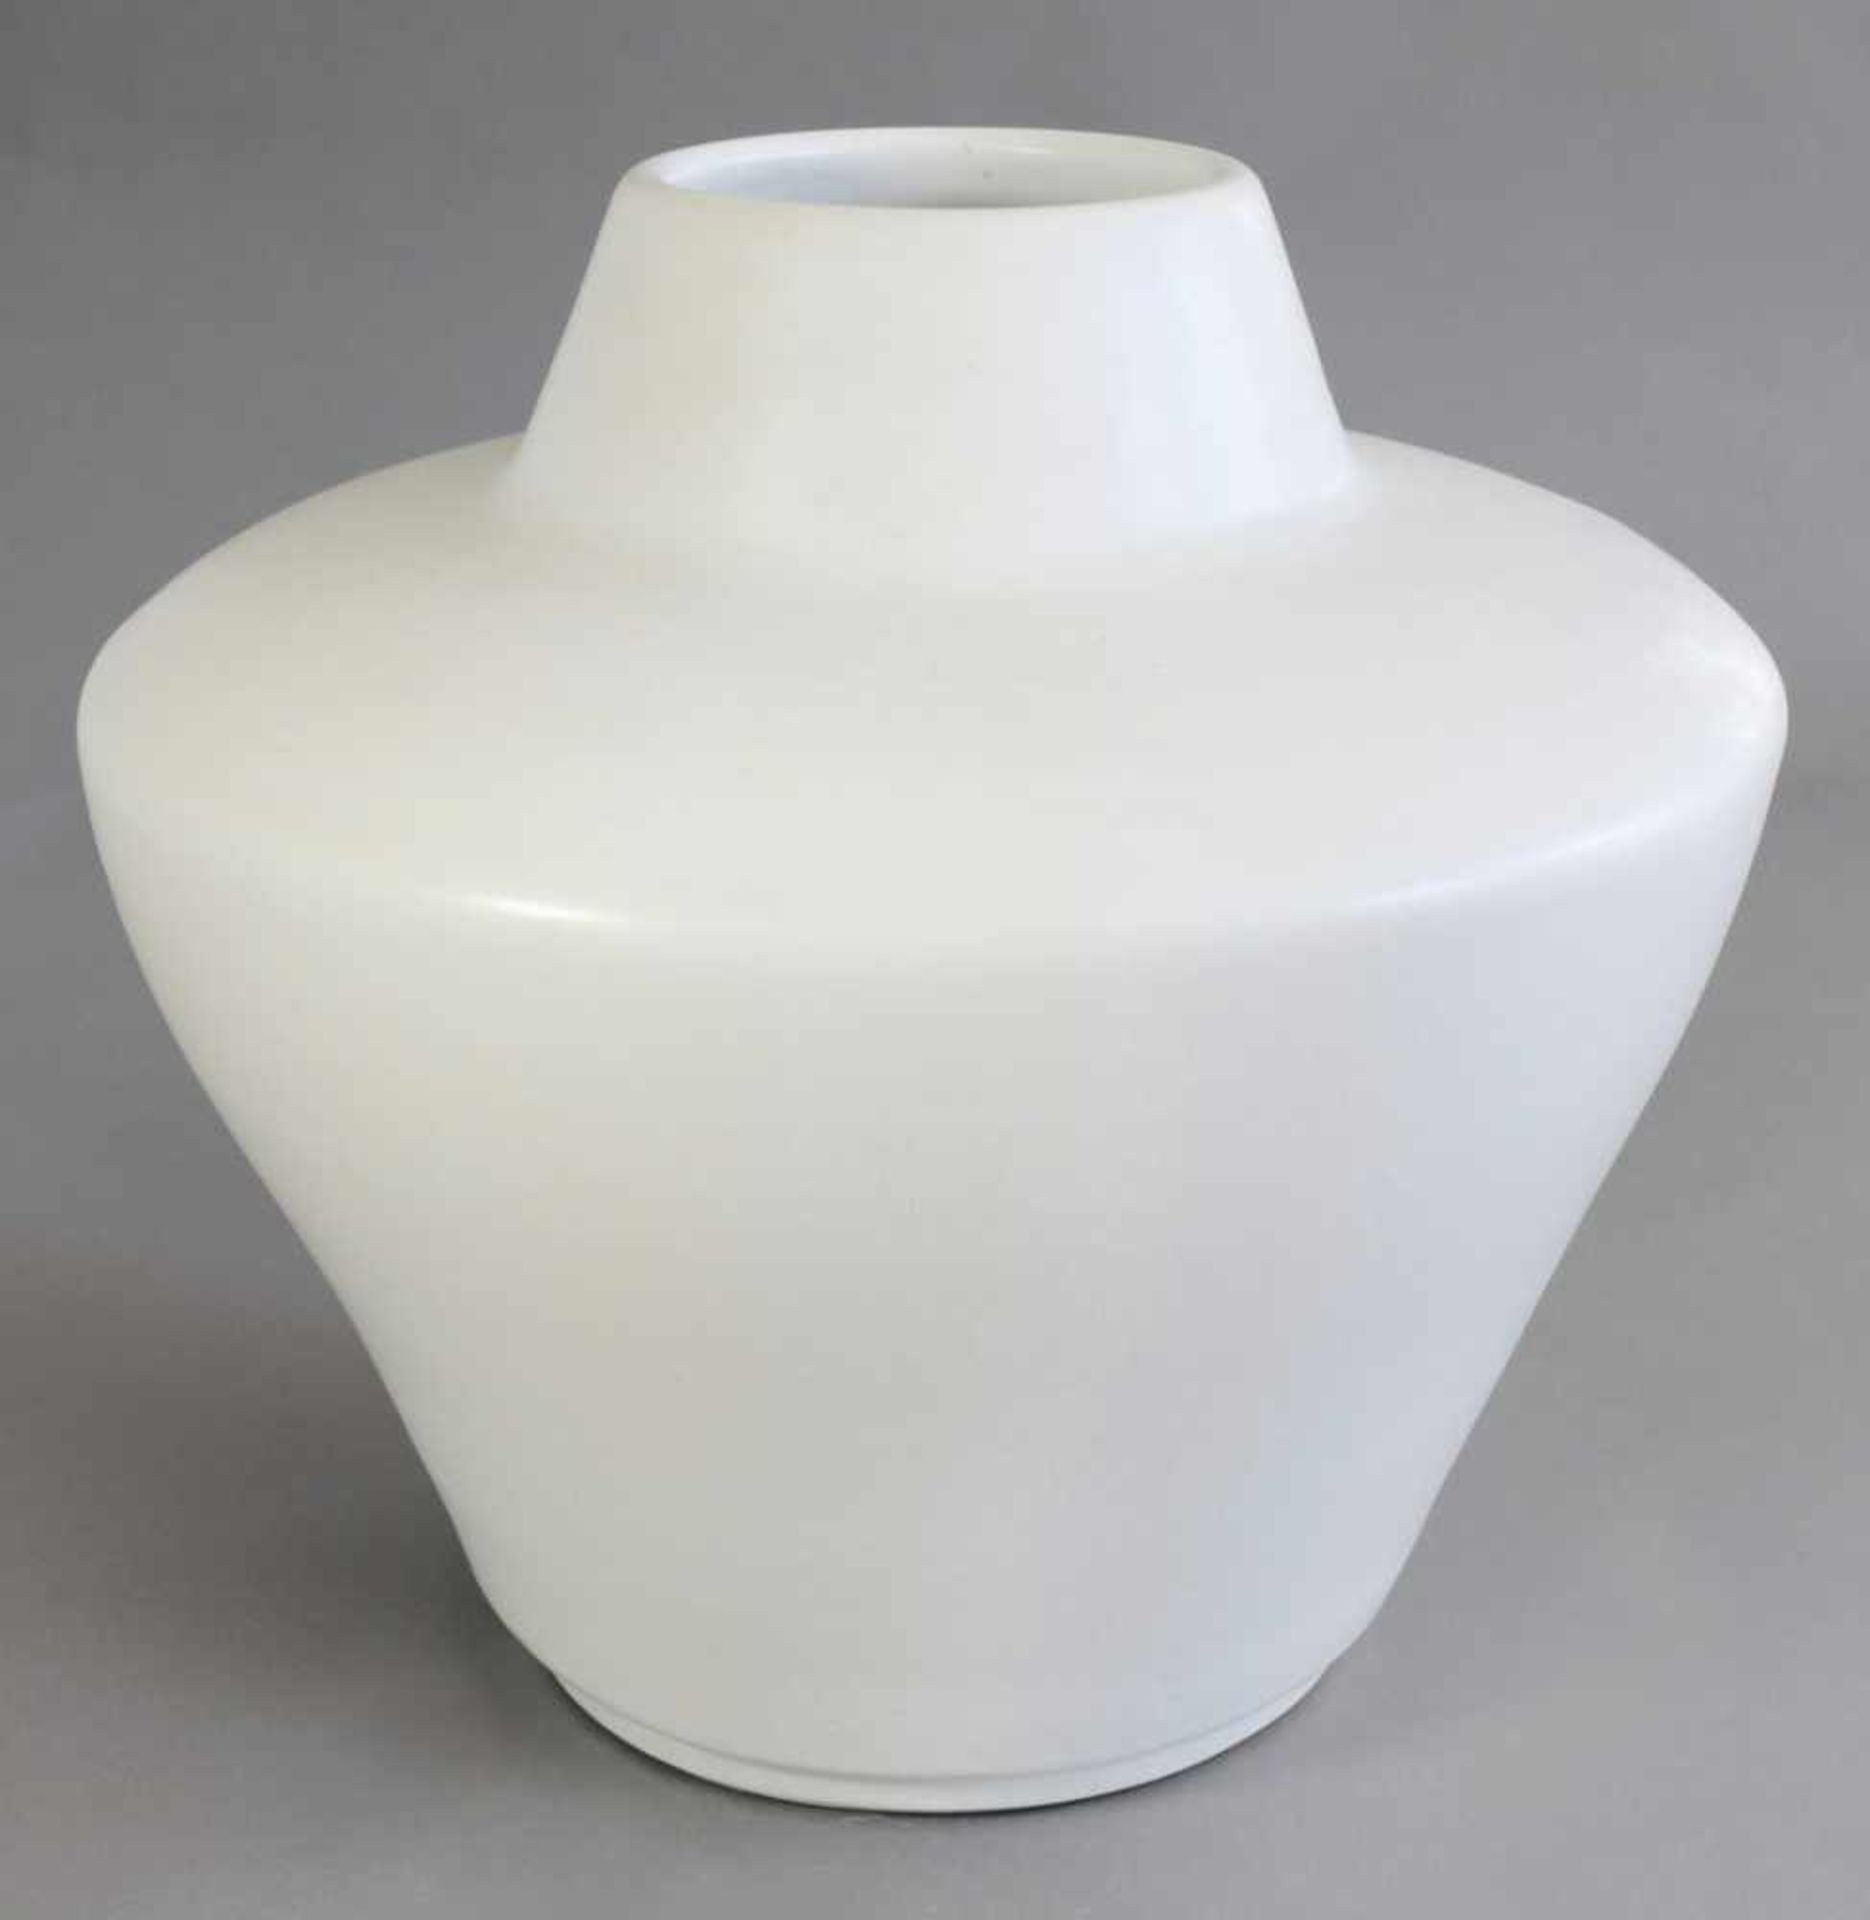 Jan Bontjes van BeekDr. Alfred Ungewiß1950-67Große Vase. 1950-67. Keramik. Matt weiße Glasur. H.